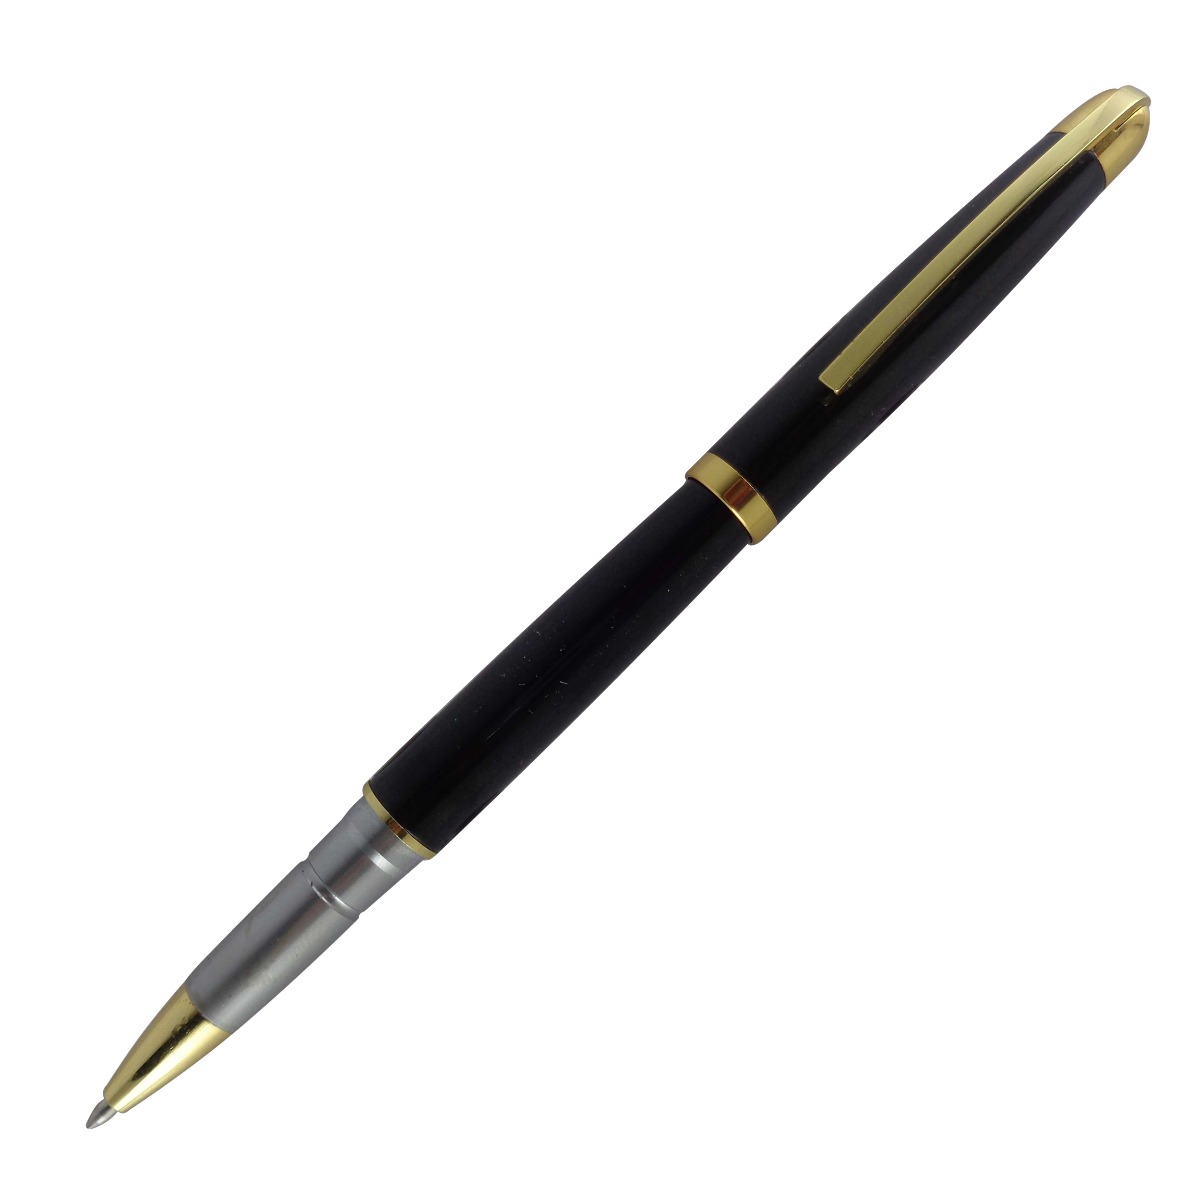 Jinhao 606 Model: 14978 Black color body with golden color clip cap type medium tip  roller ball